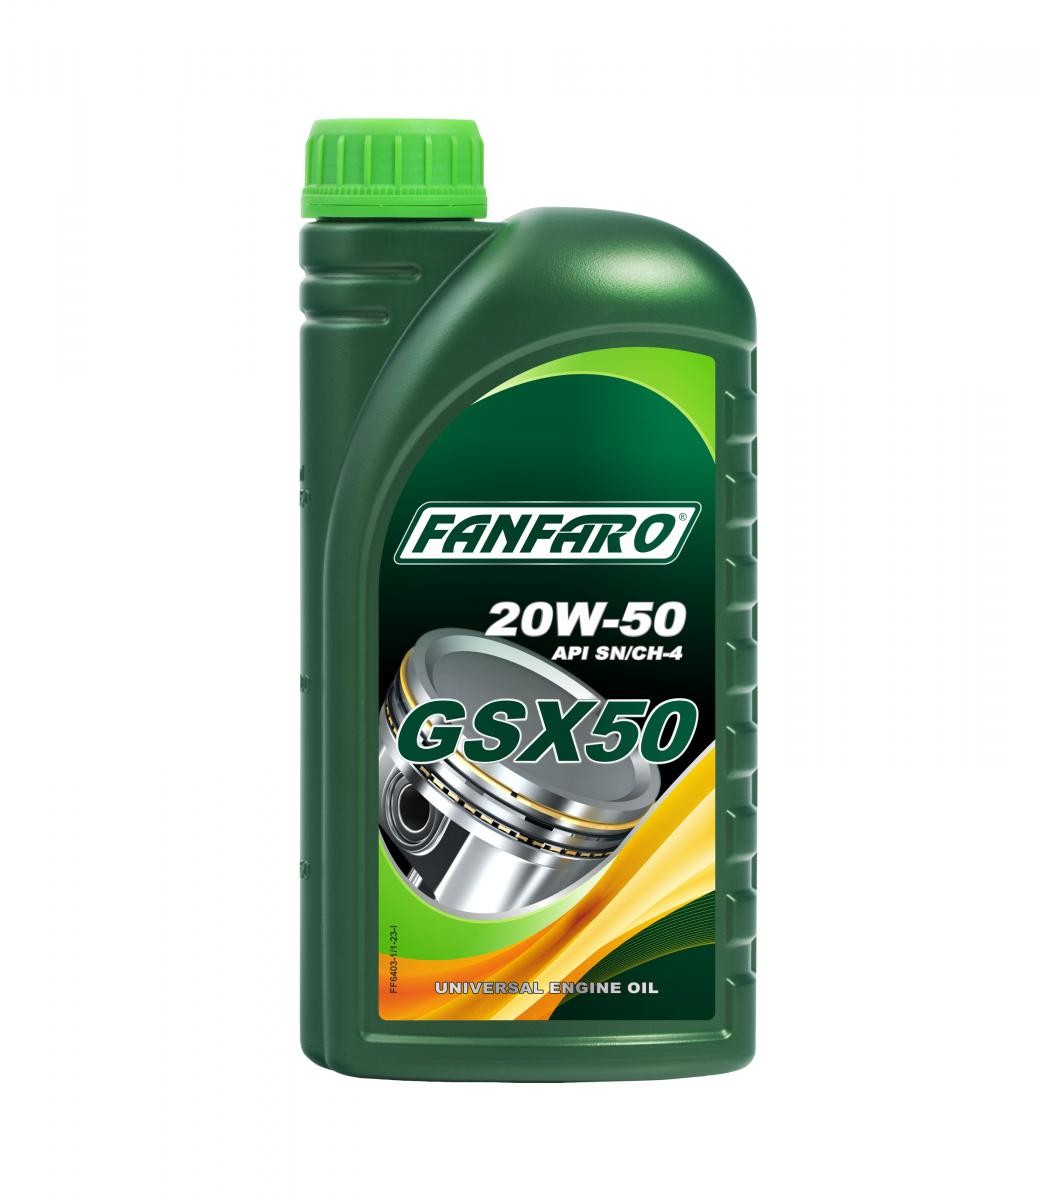 FANFARO Master Line, GSX 50 20W-50, 1l, Mineral Oil Motor oil FF6403-1 buy